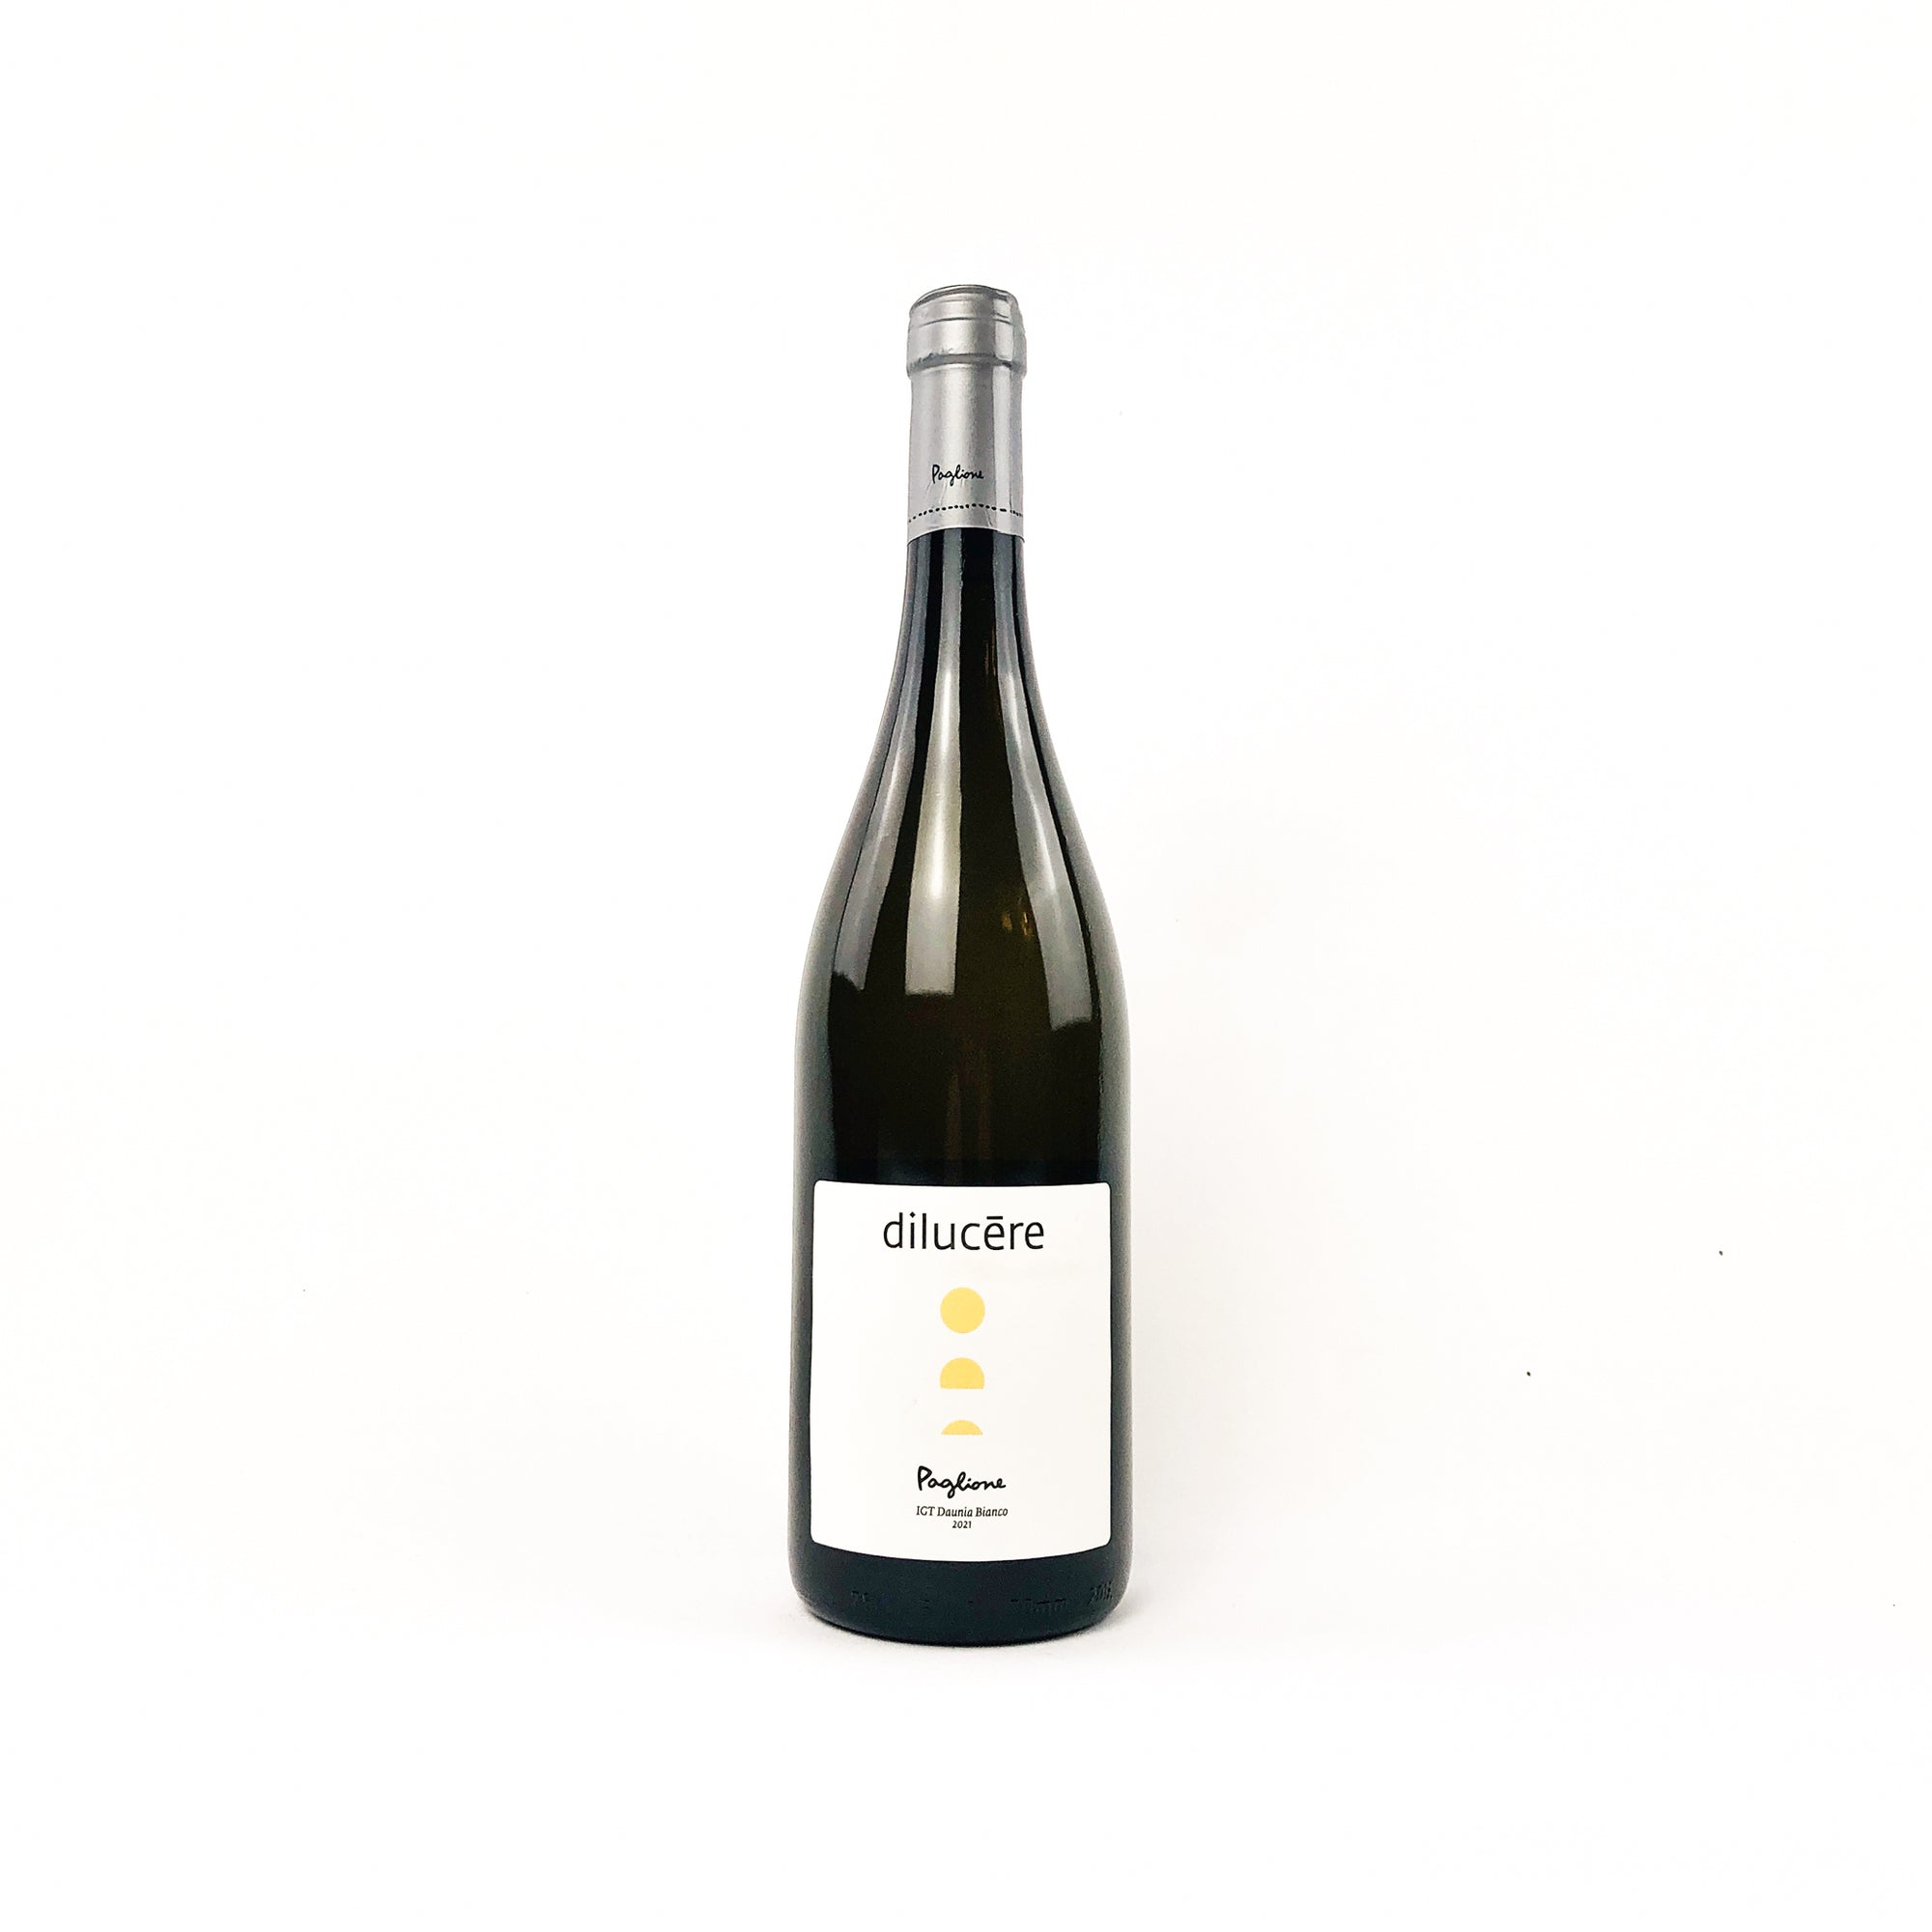 Agricola Paglione Di Lucere White natural Wine bottle front view